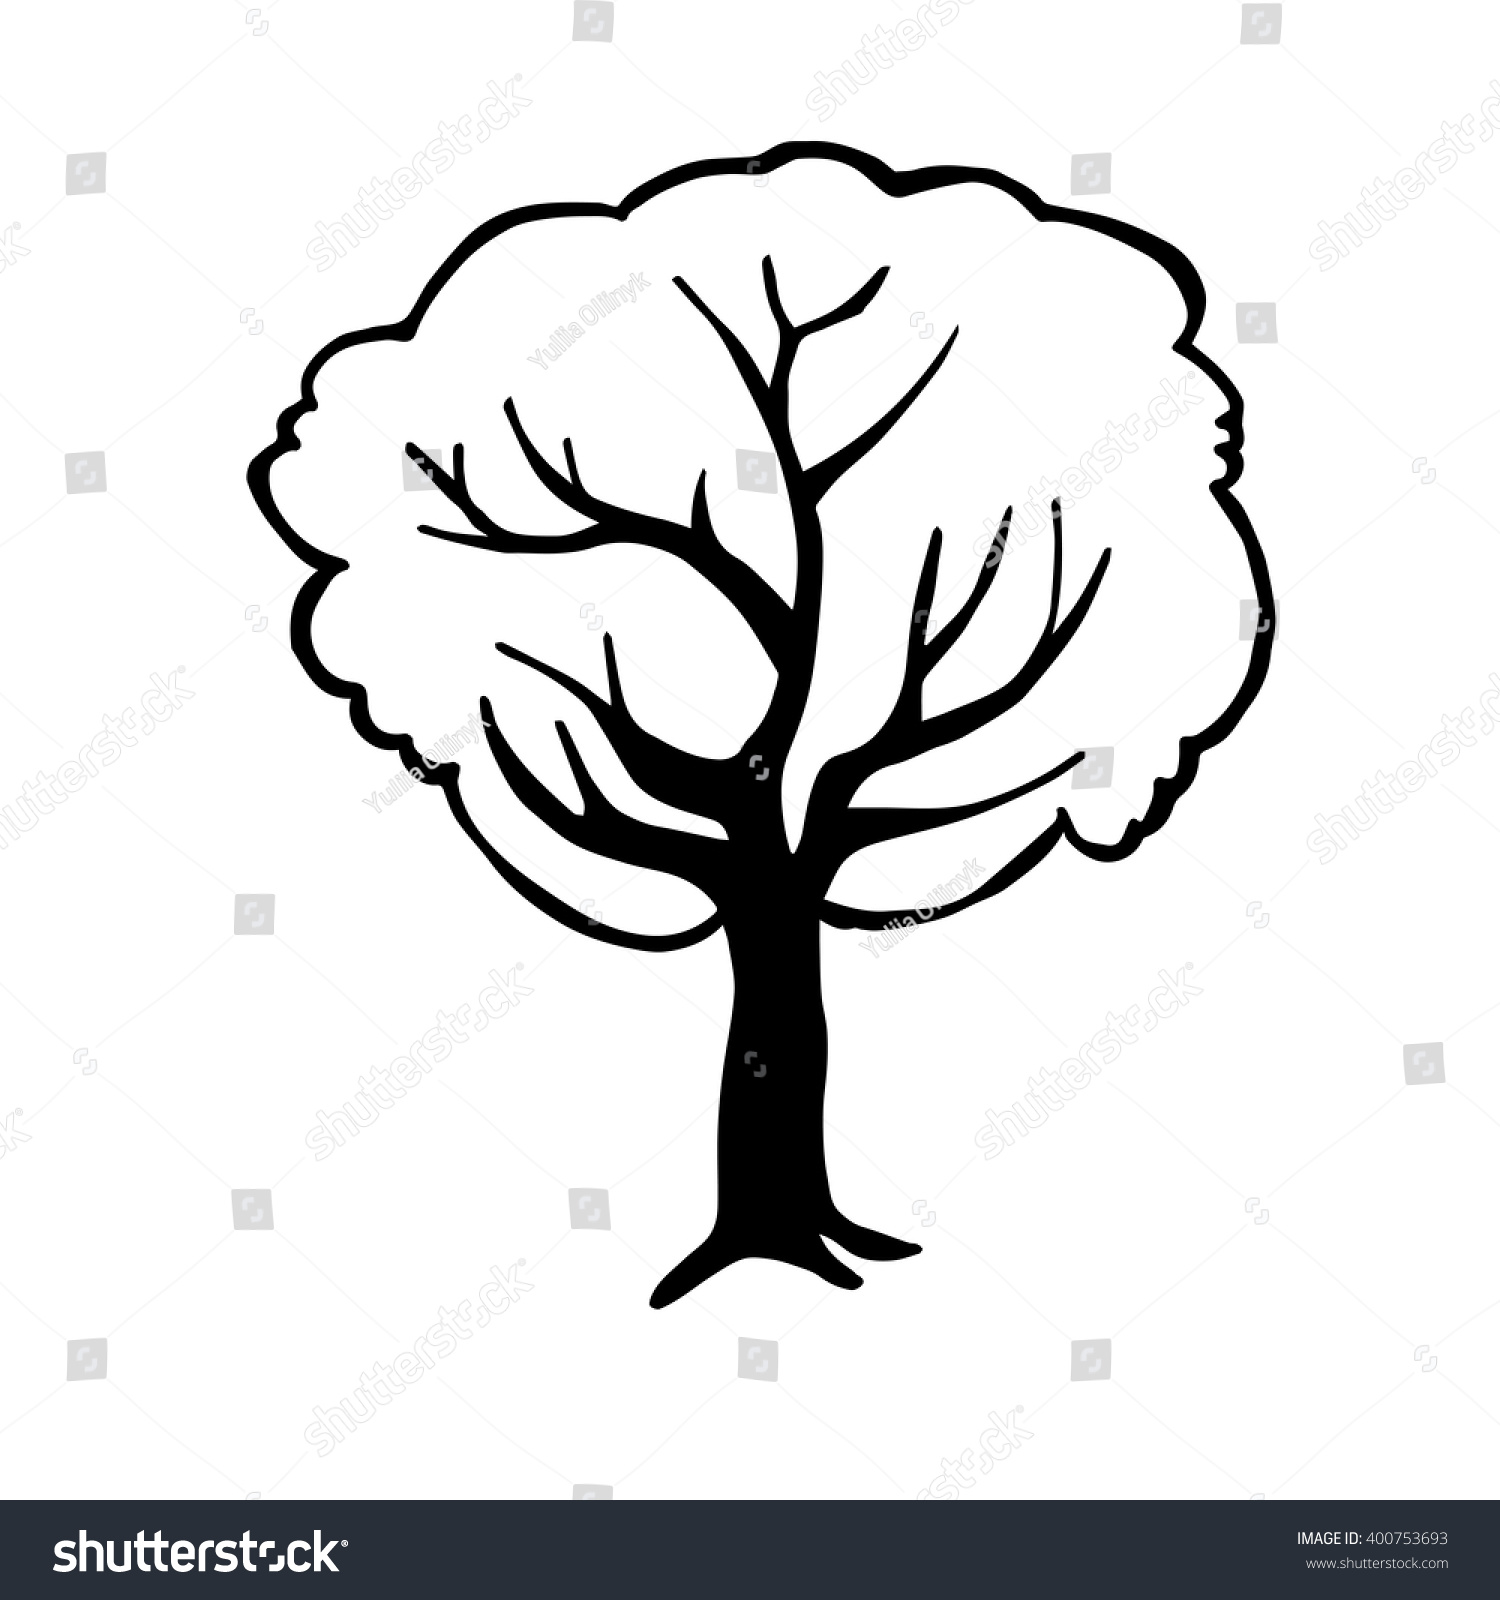 Tree Outline Vector Stock Vector (Royalty Free) 400753693 - Shutterstock